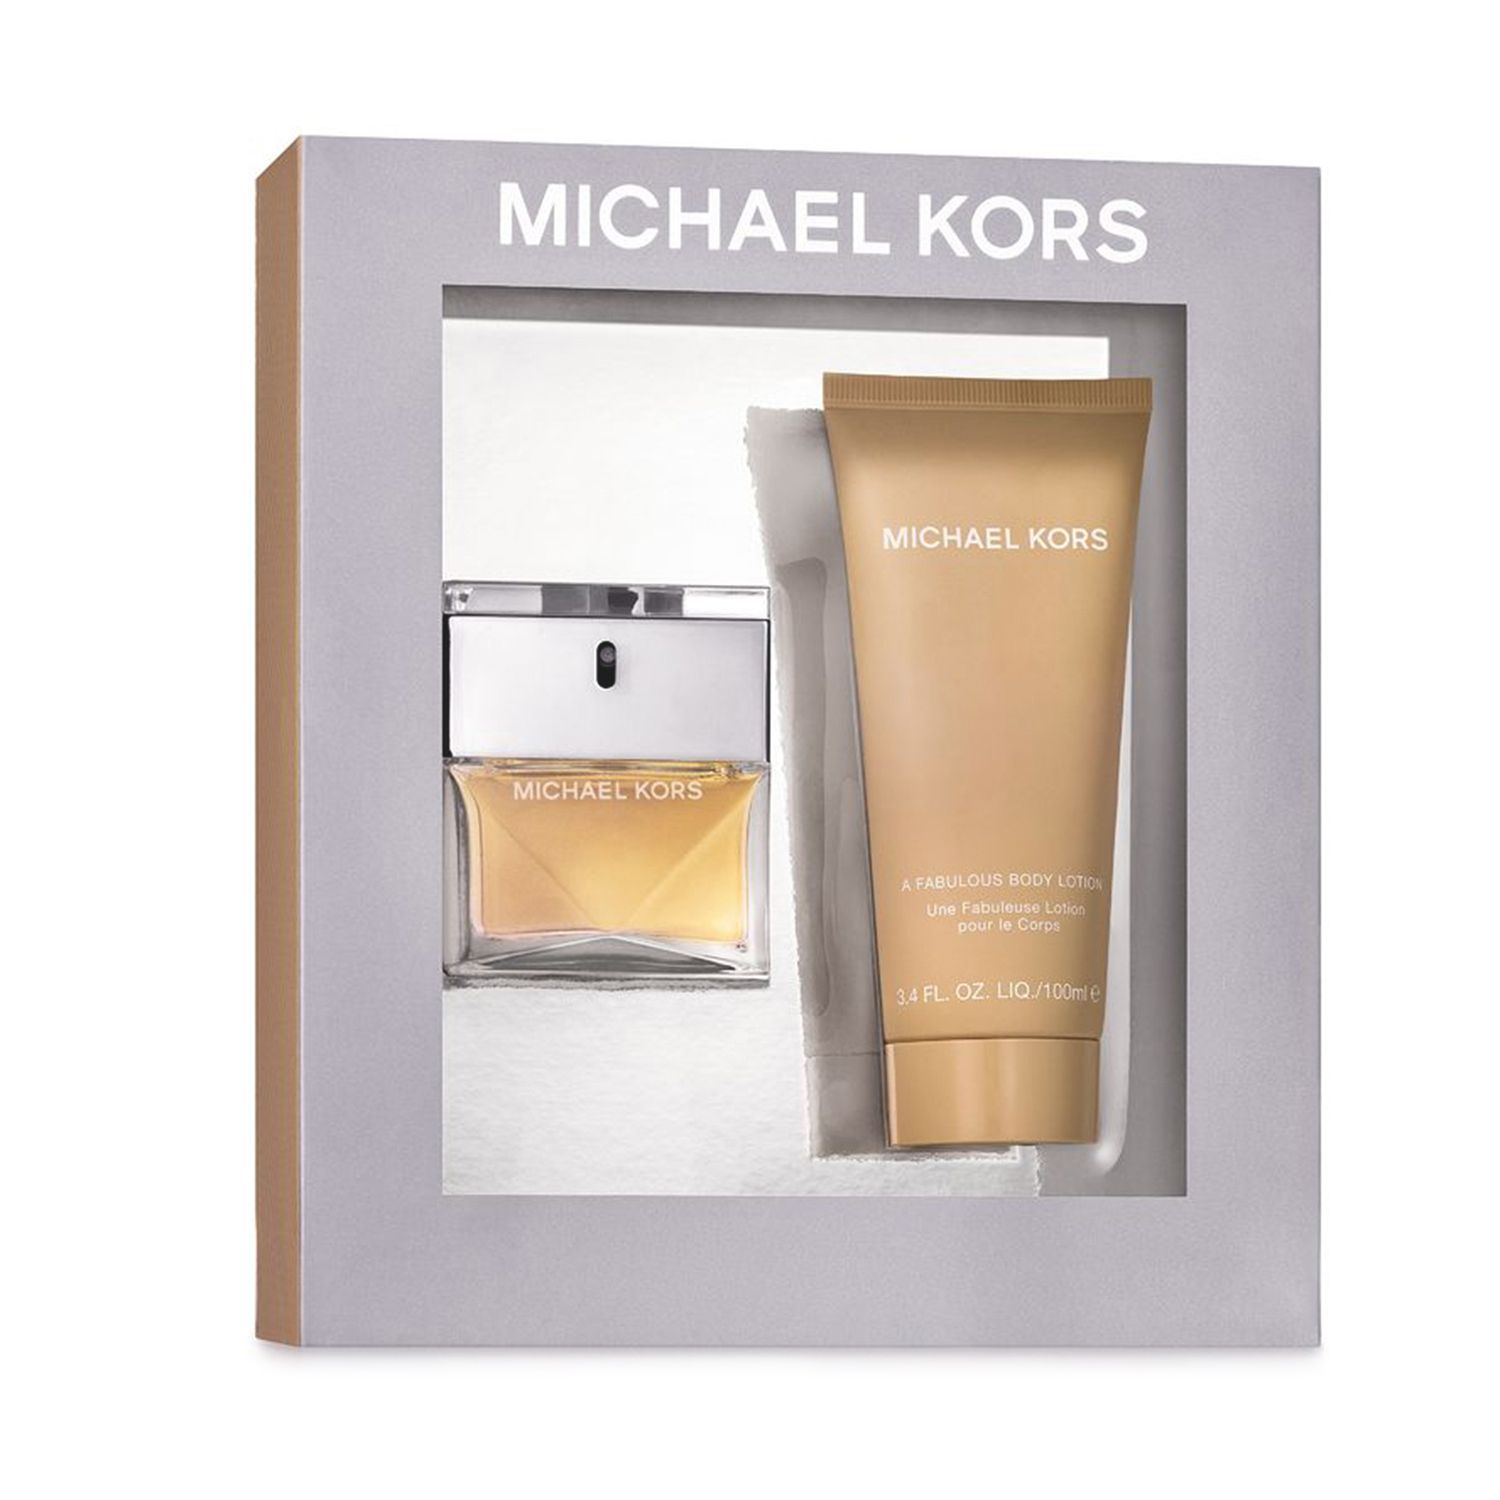 Michael Kors Women's Perfume Gift Set